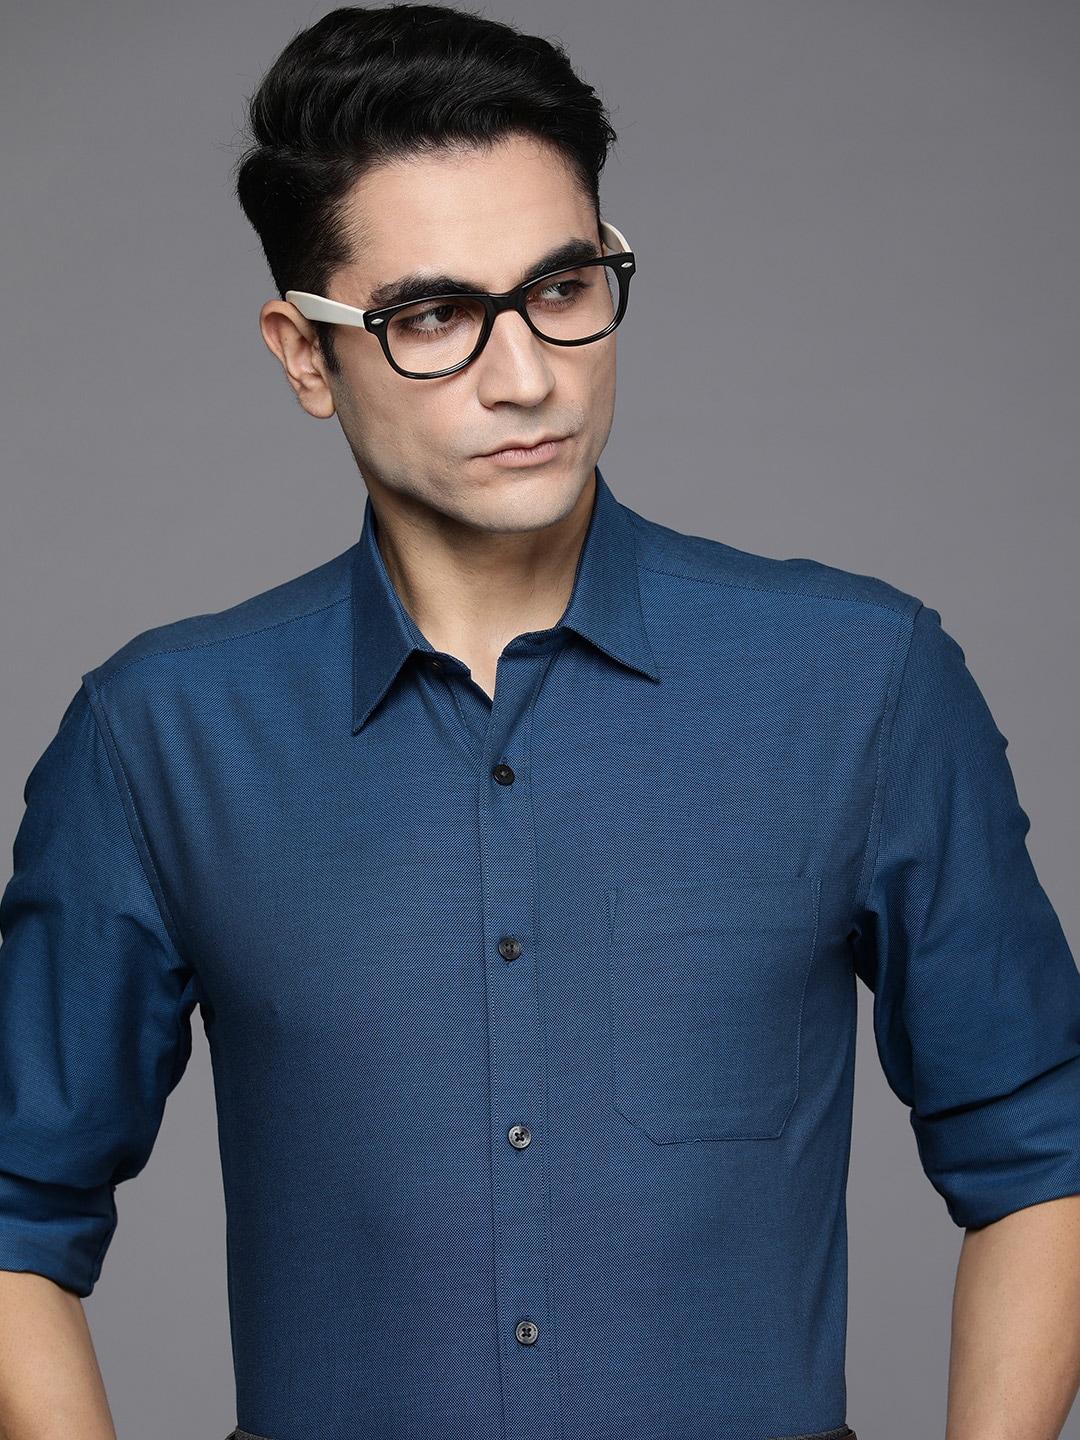 louis philippe men navy blue self design textured slim fit pure cotton formal shirt